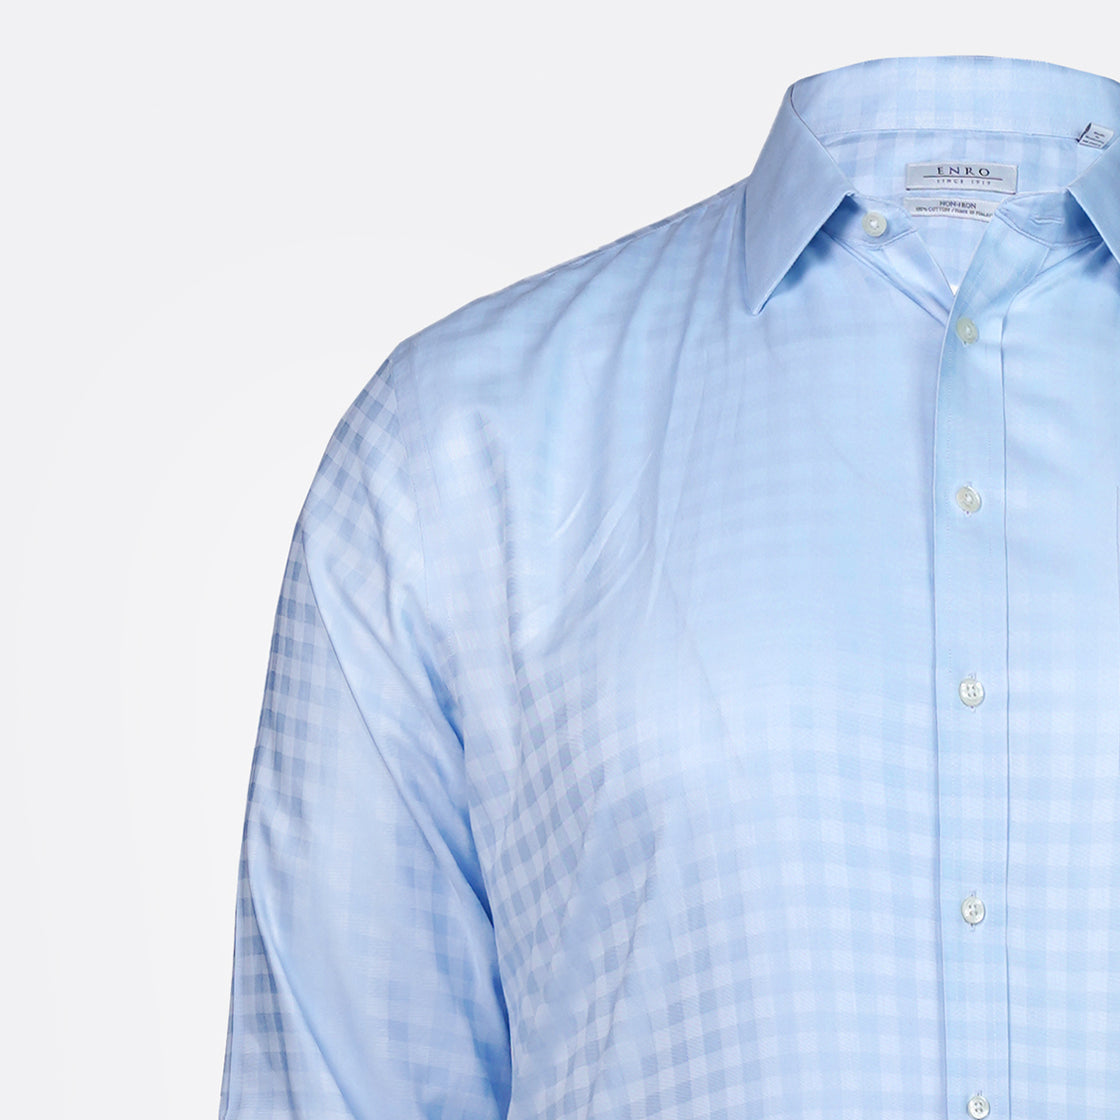 Checkered Pattern Enro Cotton Shirt Blue Closeup